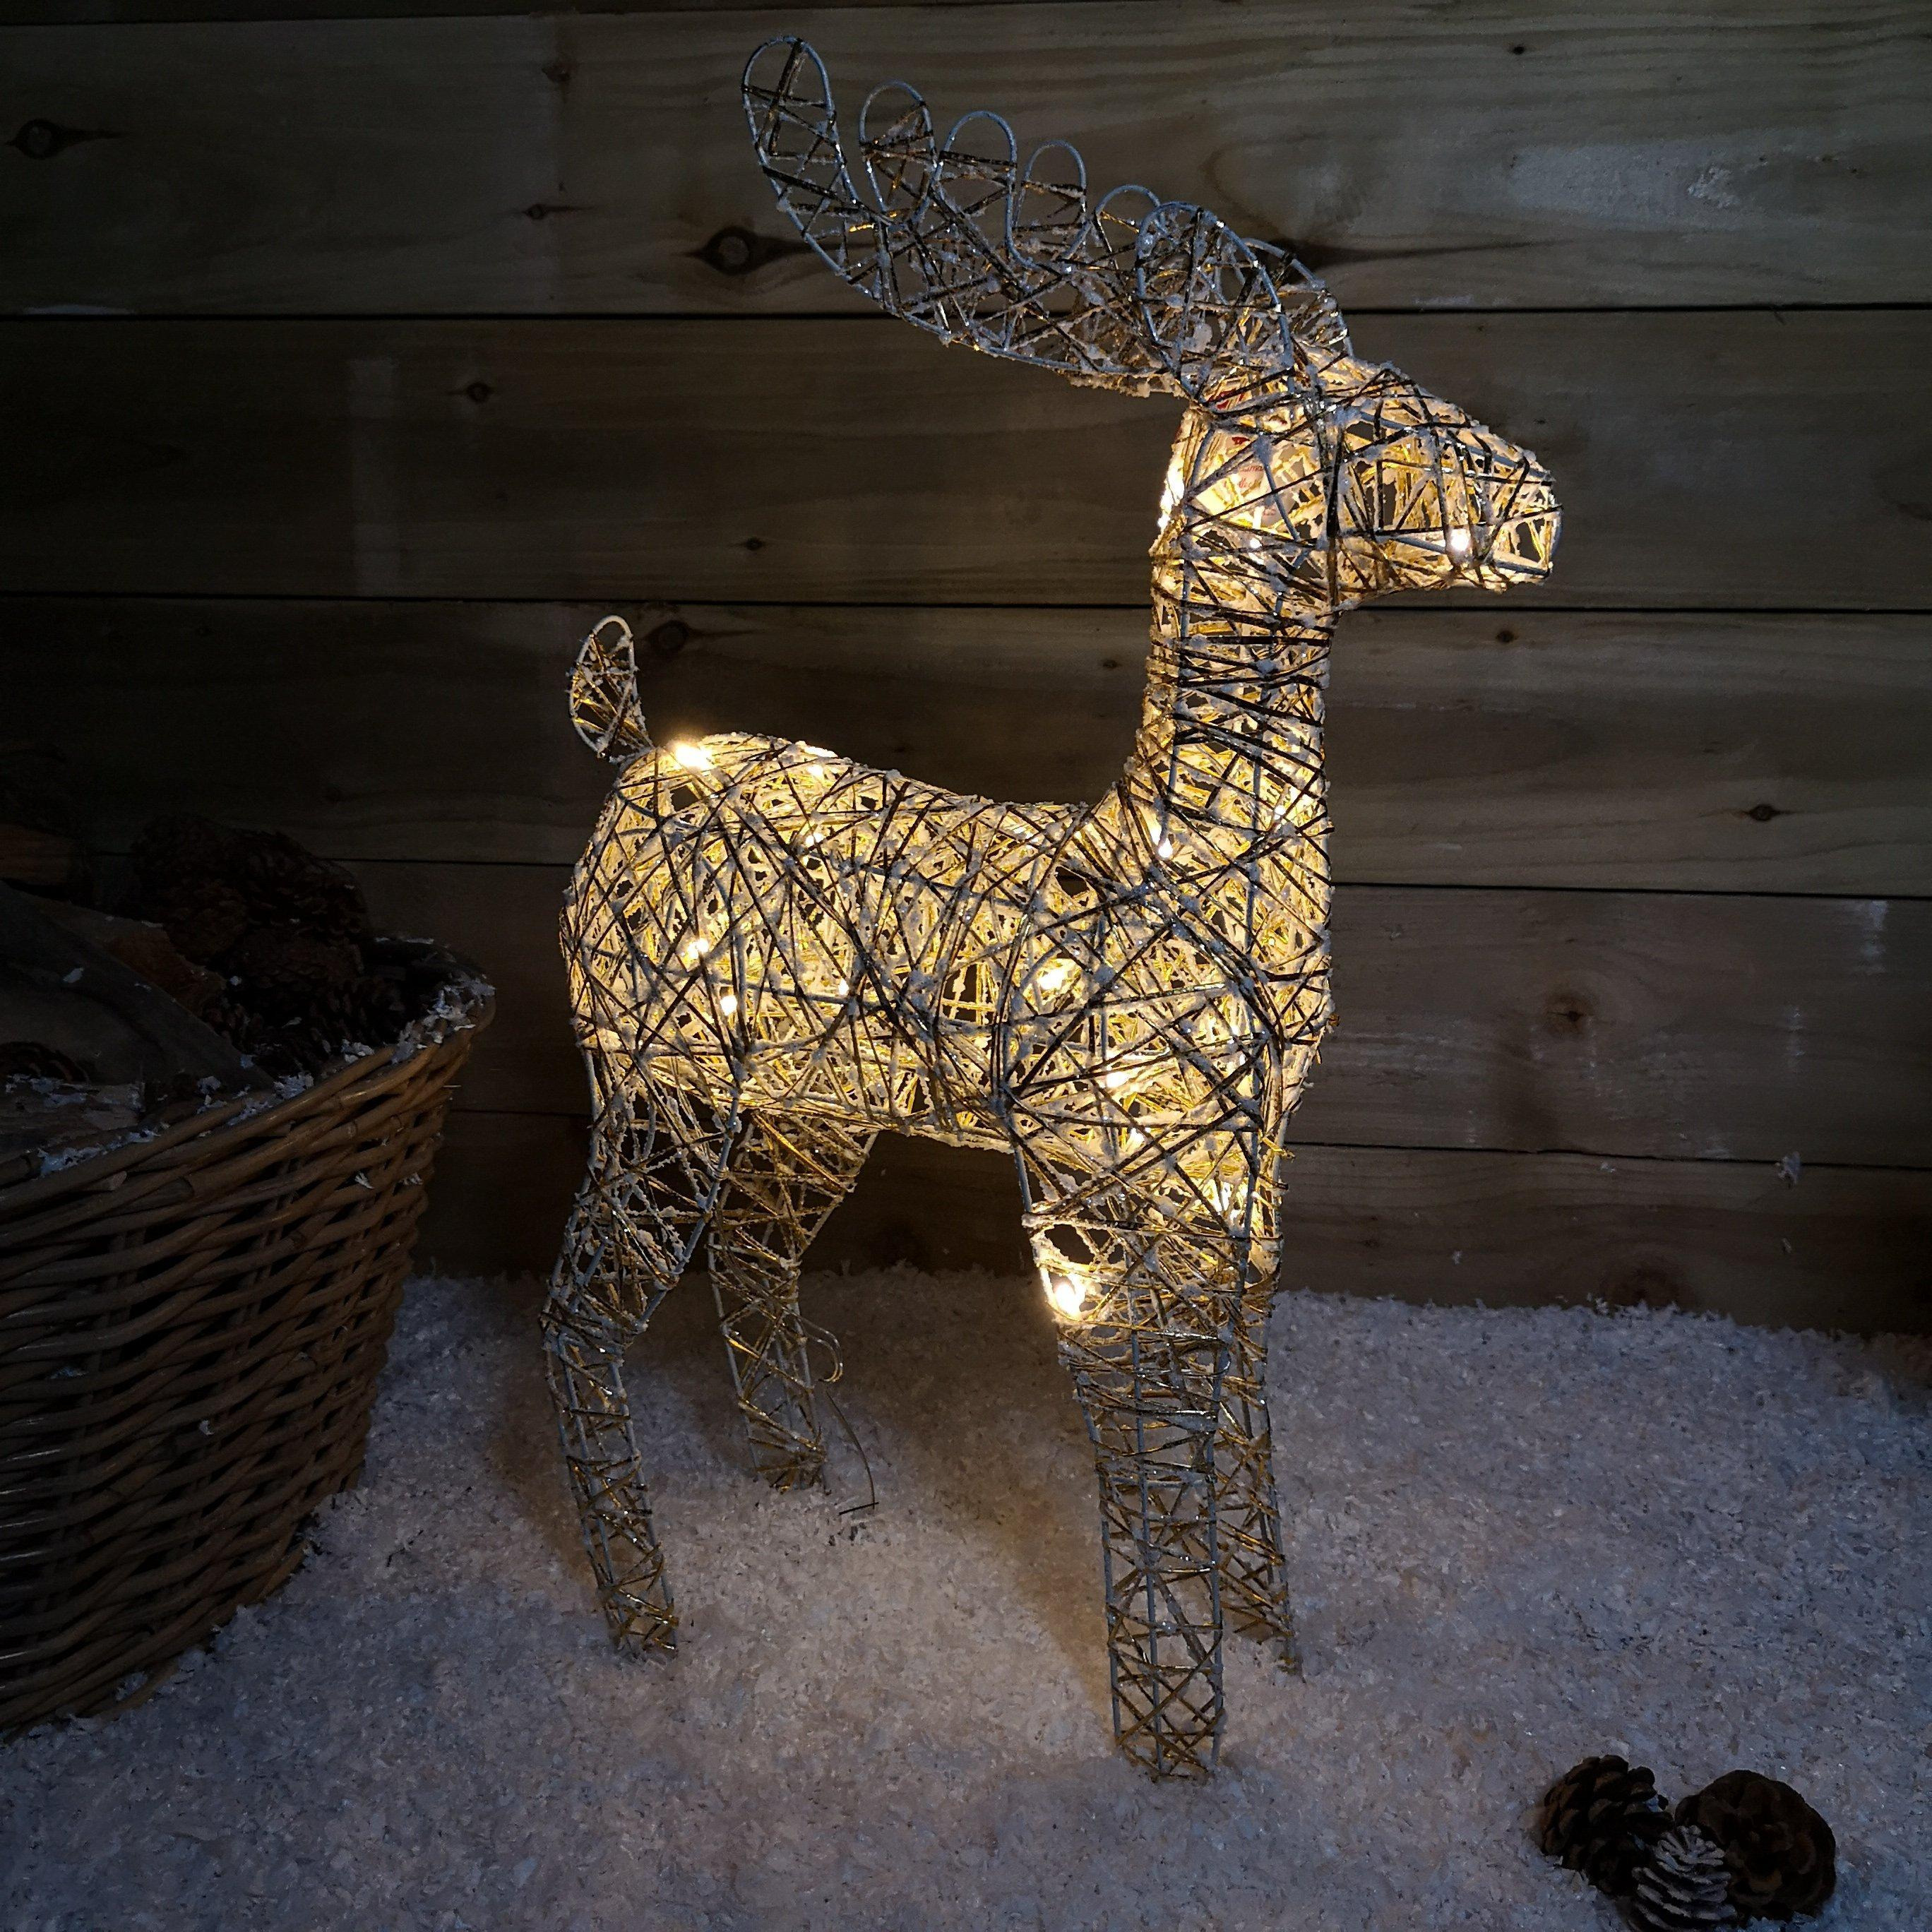 60cm Gold Wicker Large LED Illuminated Christmas Reindeer Figures Indoor Decoration - image 1